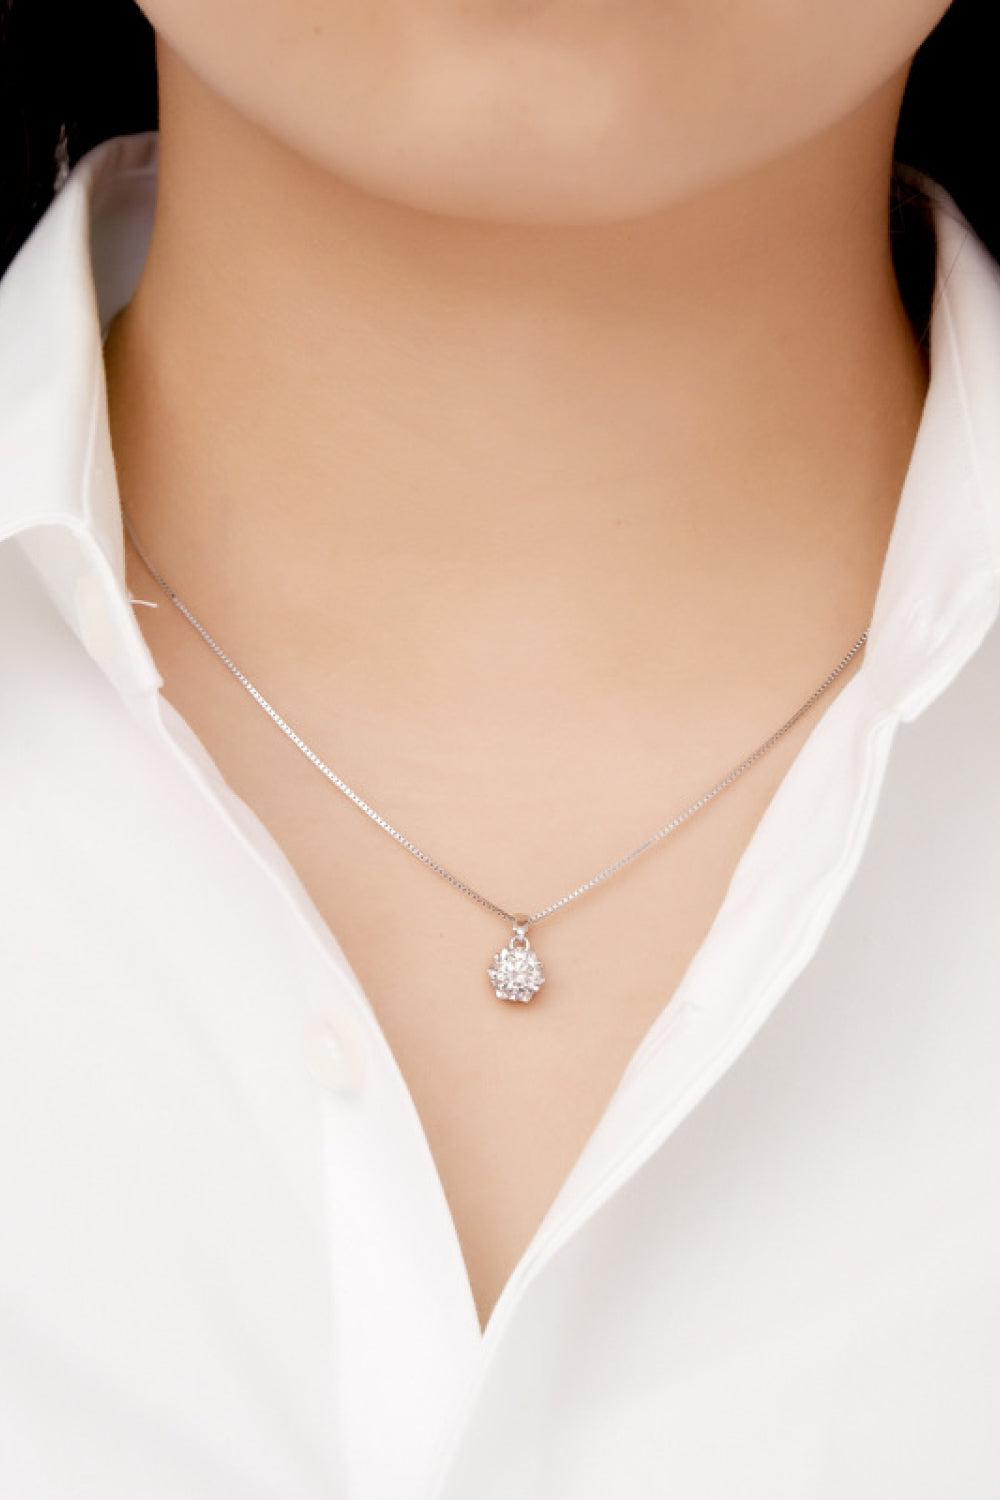 1 Carat Moissanite Pendant Platinum-Plated Necklace BLUE ZONE PLANET